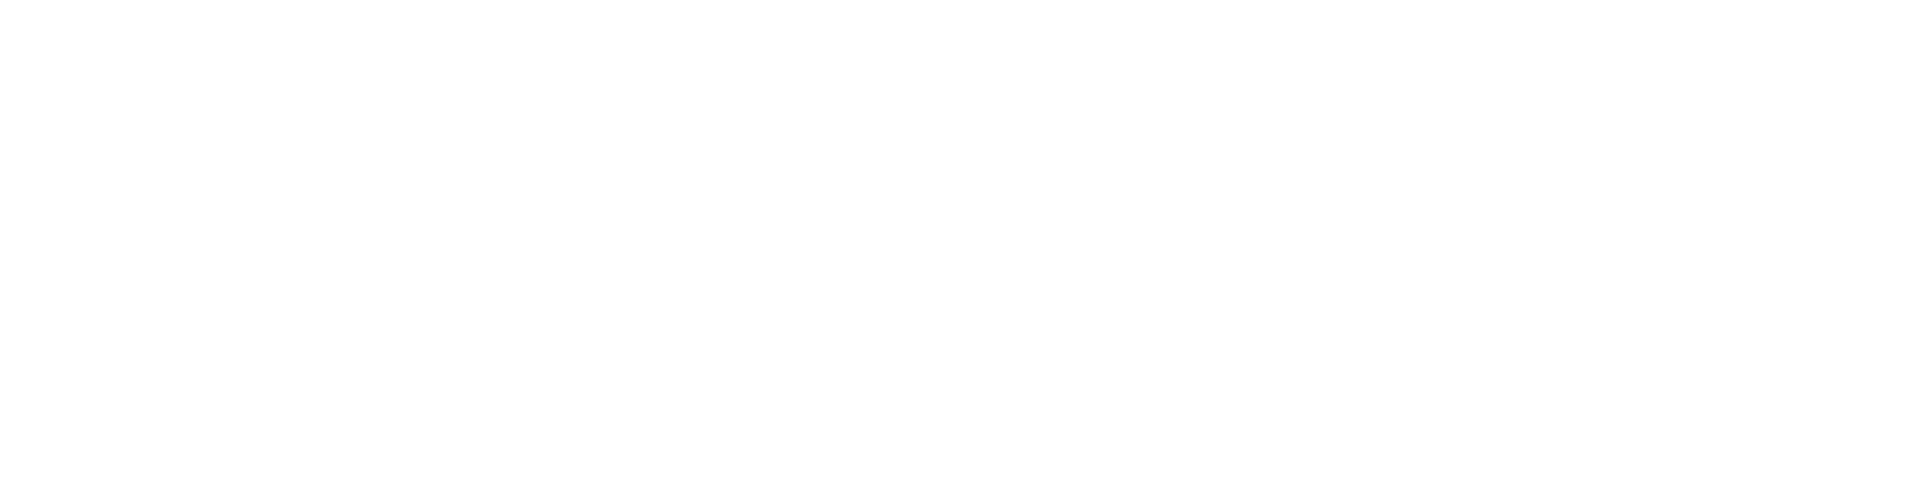 McClurg_logo_horiz_white